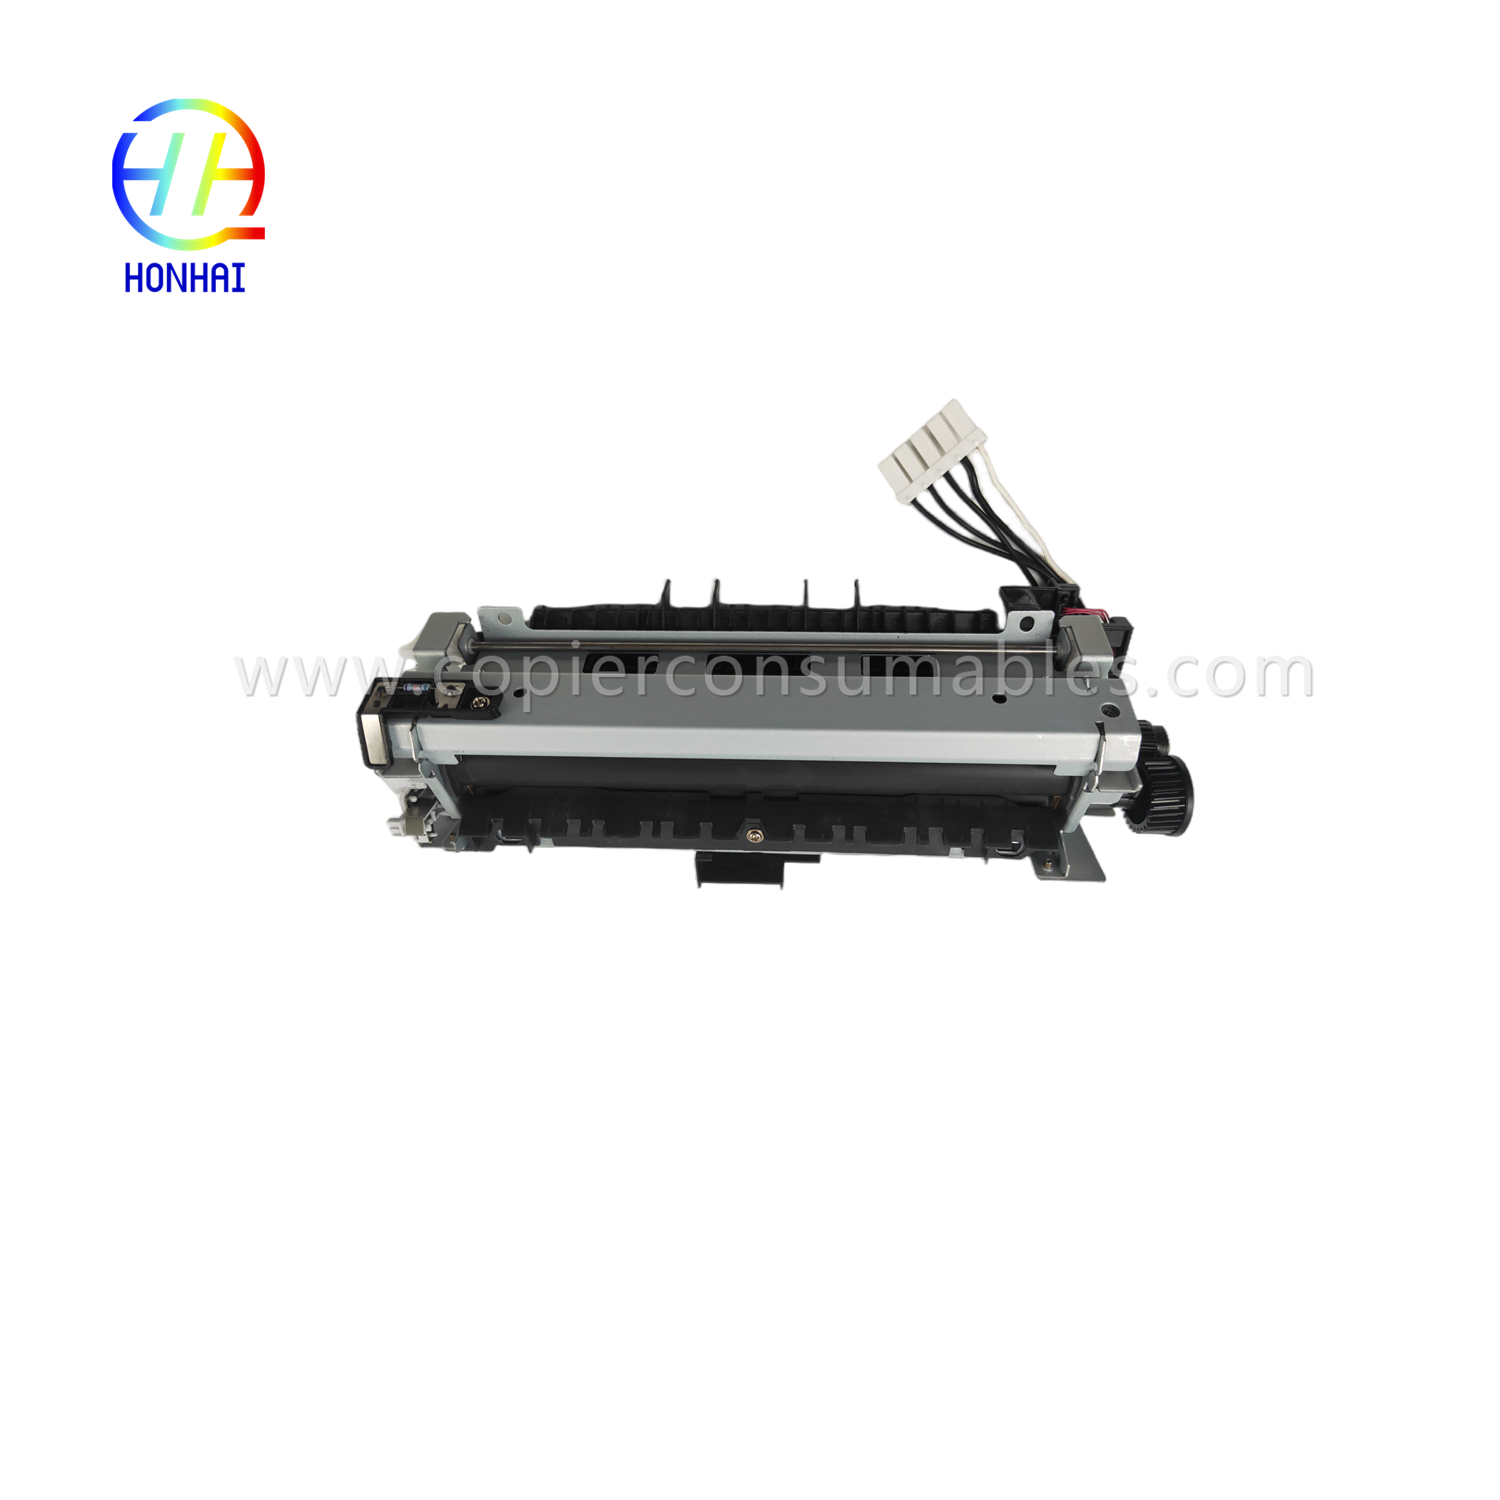 Fuser Assembly 220V (Jepang) kanggo HP 521 525 M521 M525 RM1-8508 RM1-8508-000 Unit Fuser